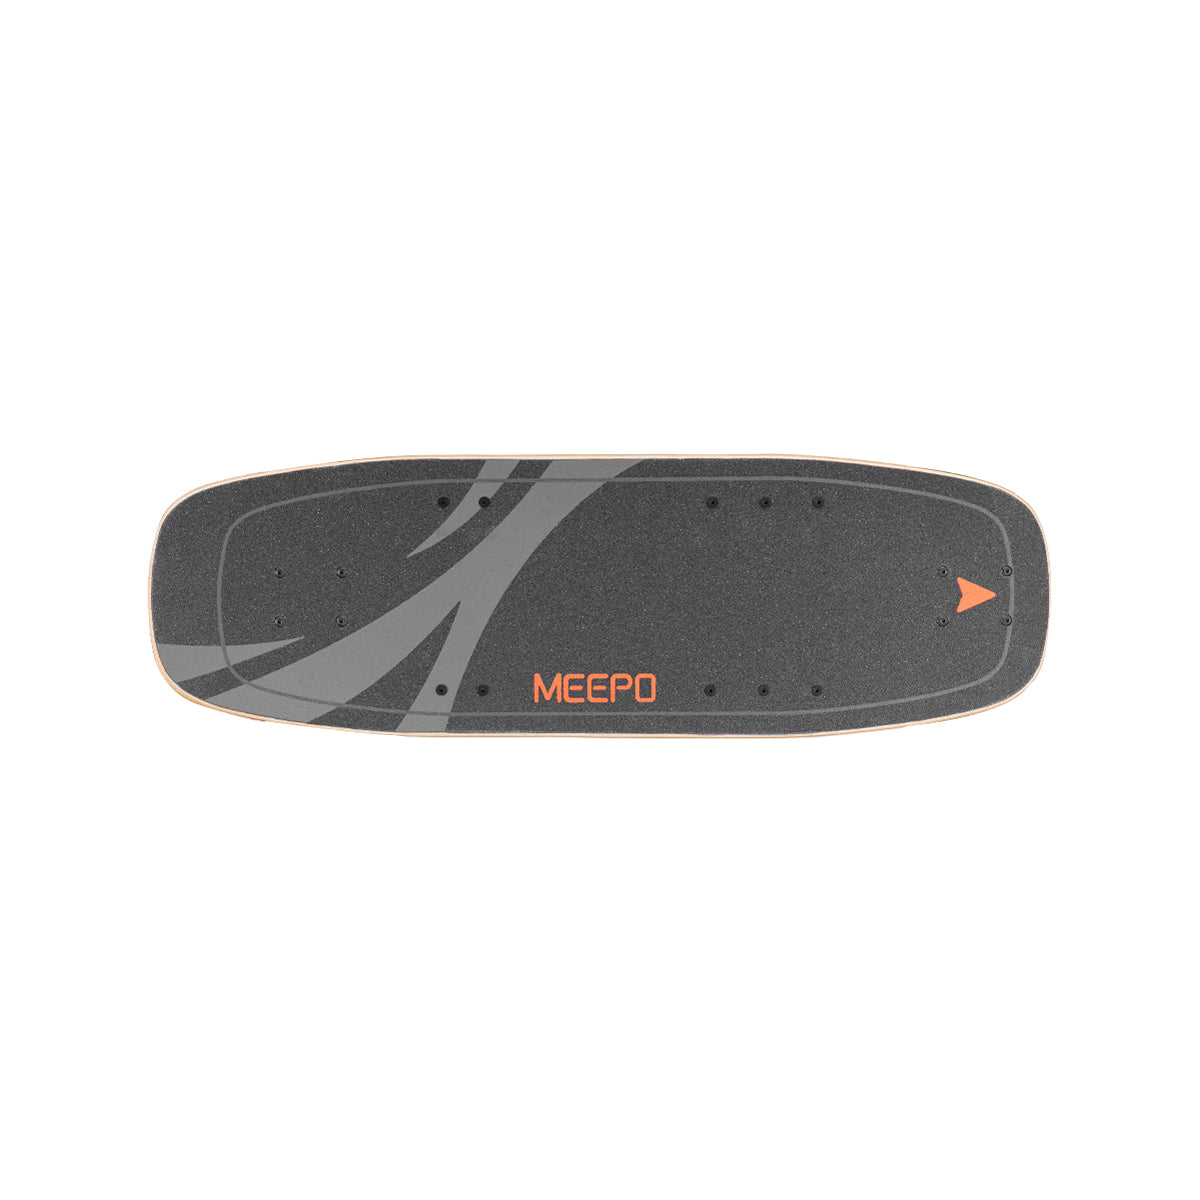 Electric Skateboard Grip Tape